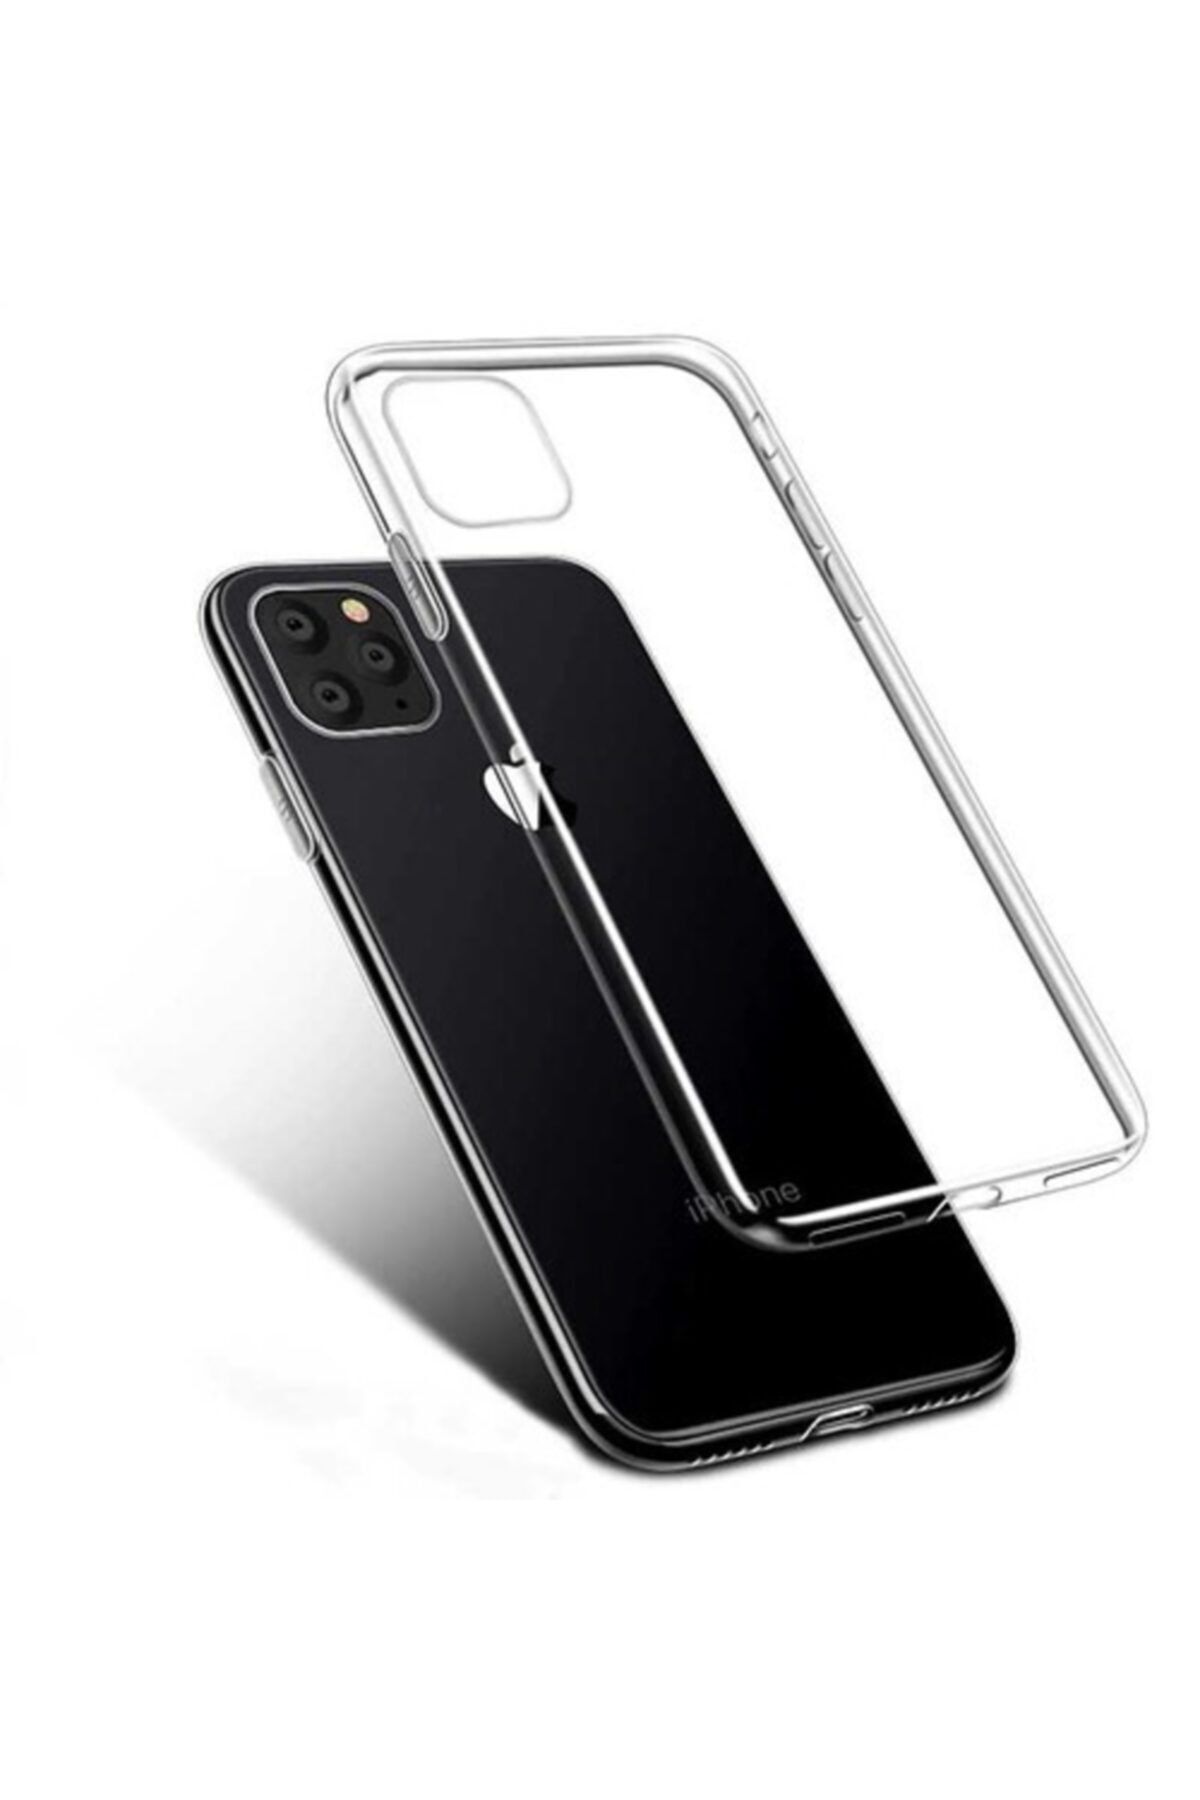 Bilişim Aksesuar Iphone 11 Pro Max (6.5") Şeffaf Kılıf 0,2 Mm Ultra Ince